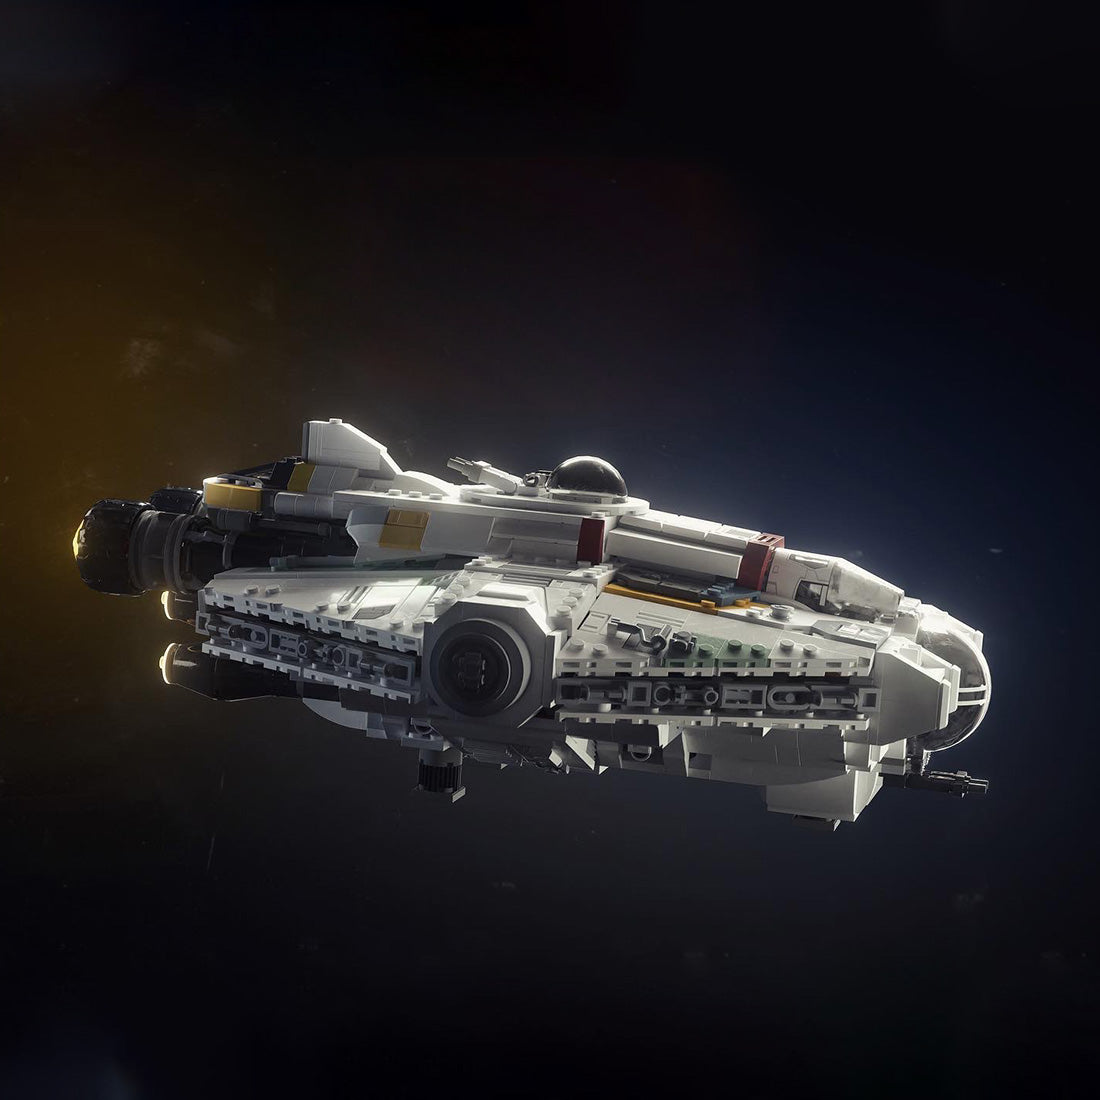 MOC-159490 Ghost Spaceship